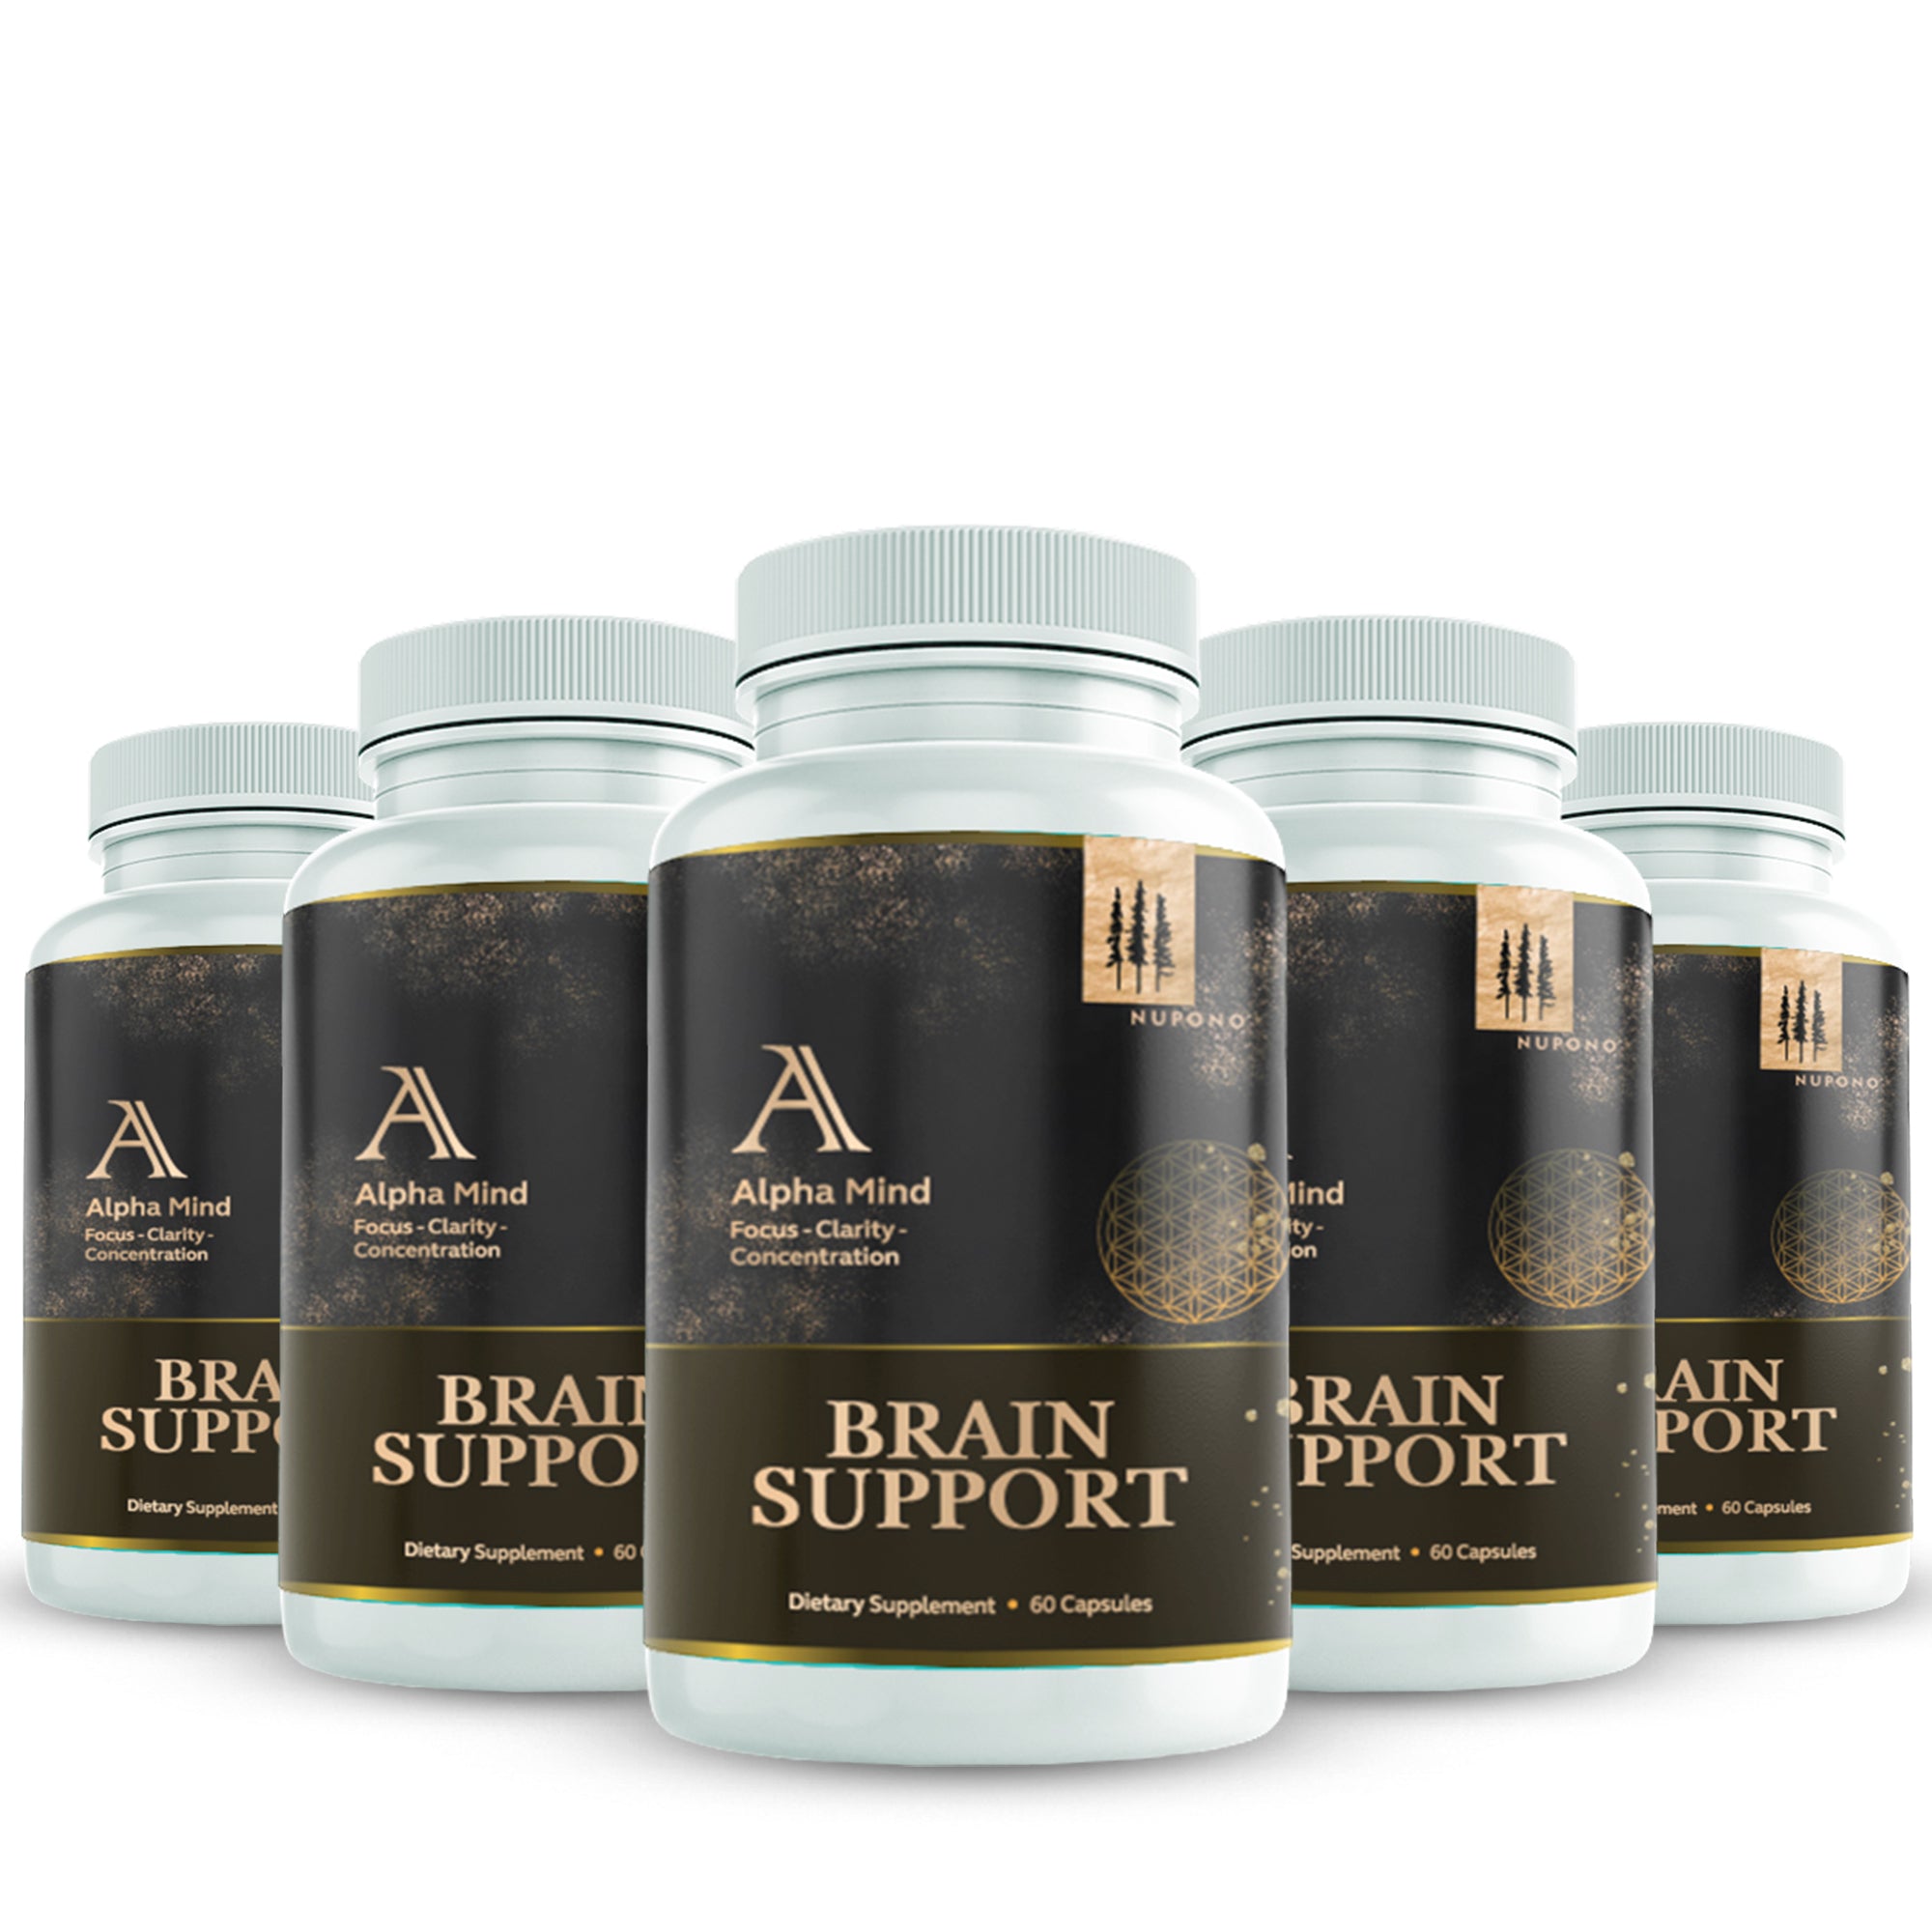 Super Brain Support, Supports Memory & Focus, Premium Nootropic Supplement 60 Capsules, St. John's Wort, Glutamine, Bacopa Monnieri, Ginkgo Biloba